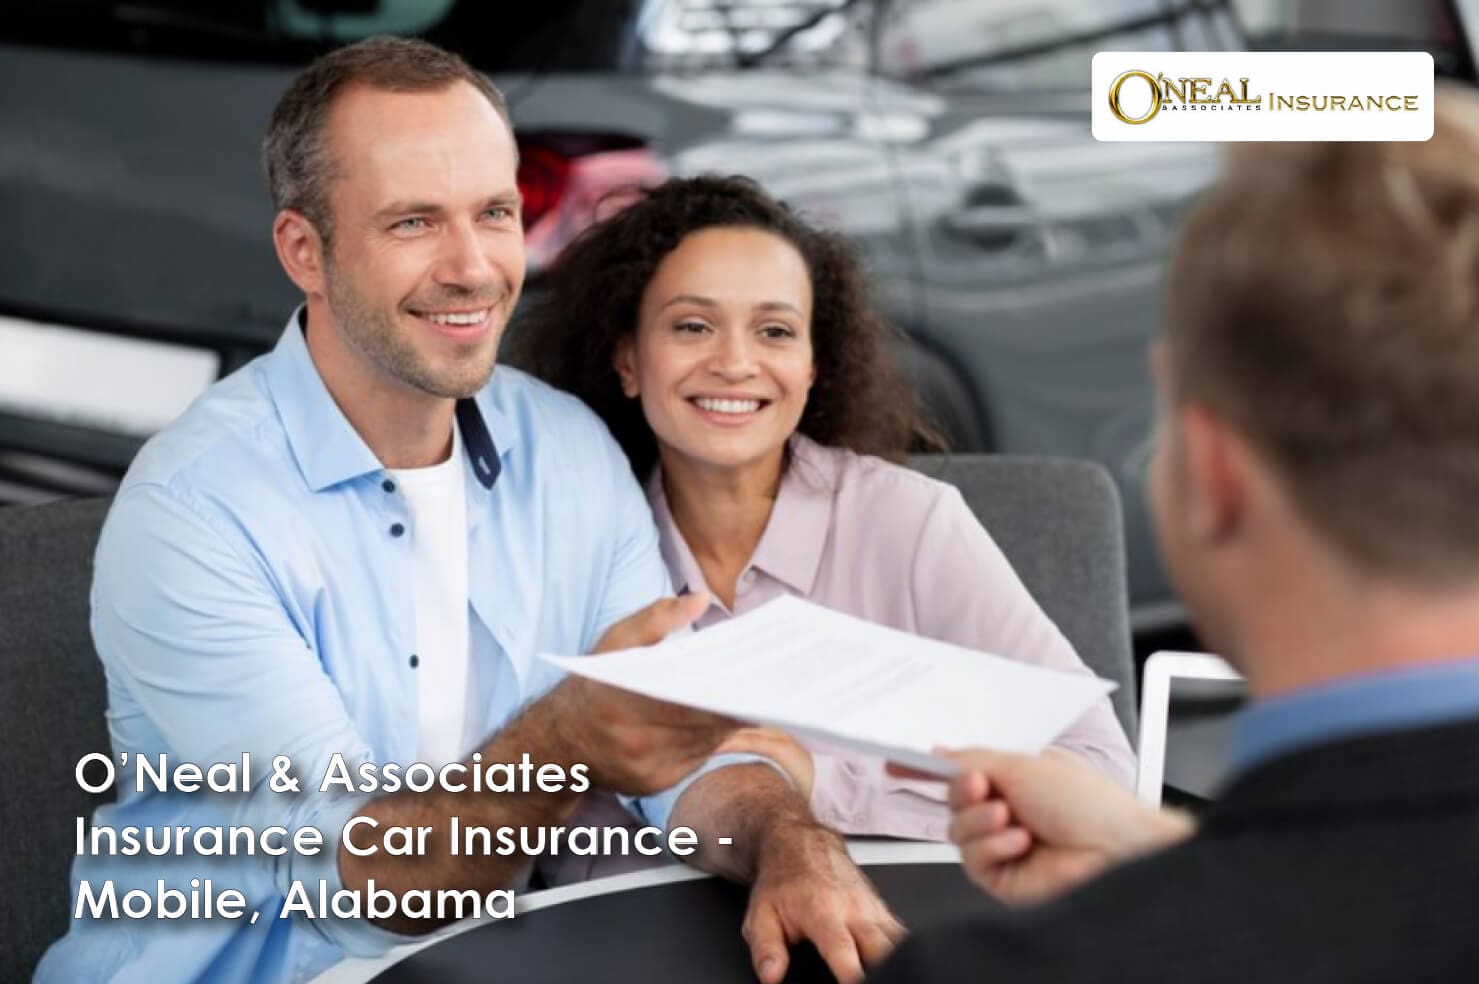 Representing O'Neal & Associates Insurance Car Insurance in Mobile, Alabama